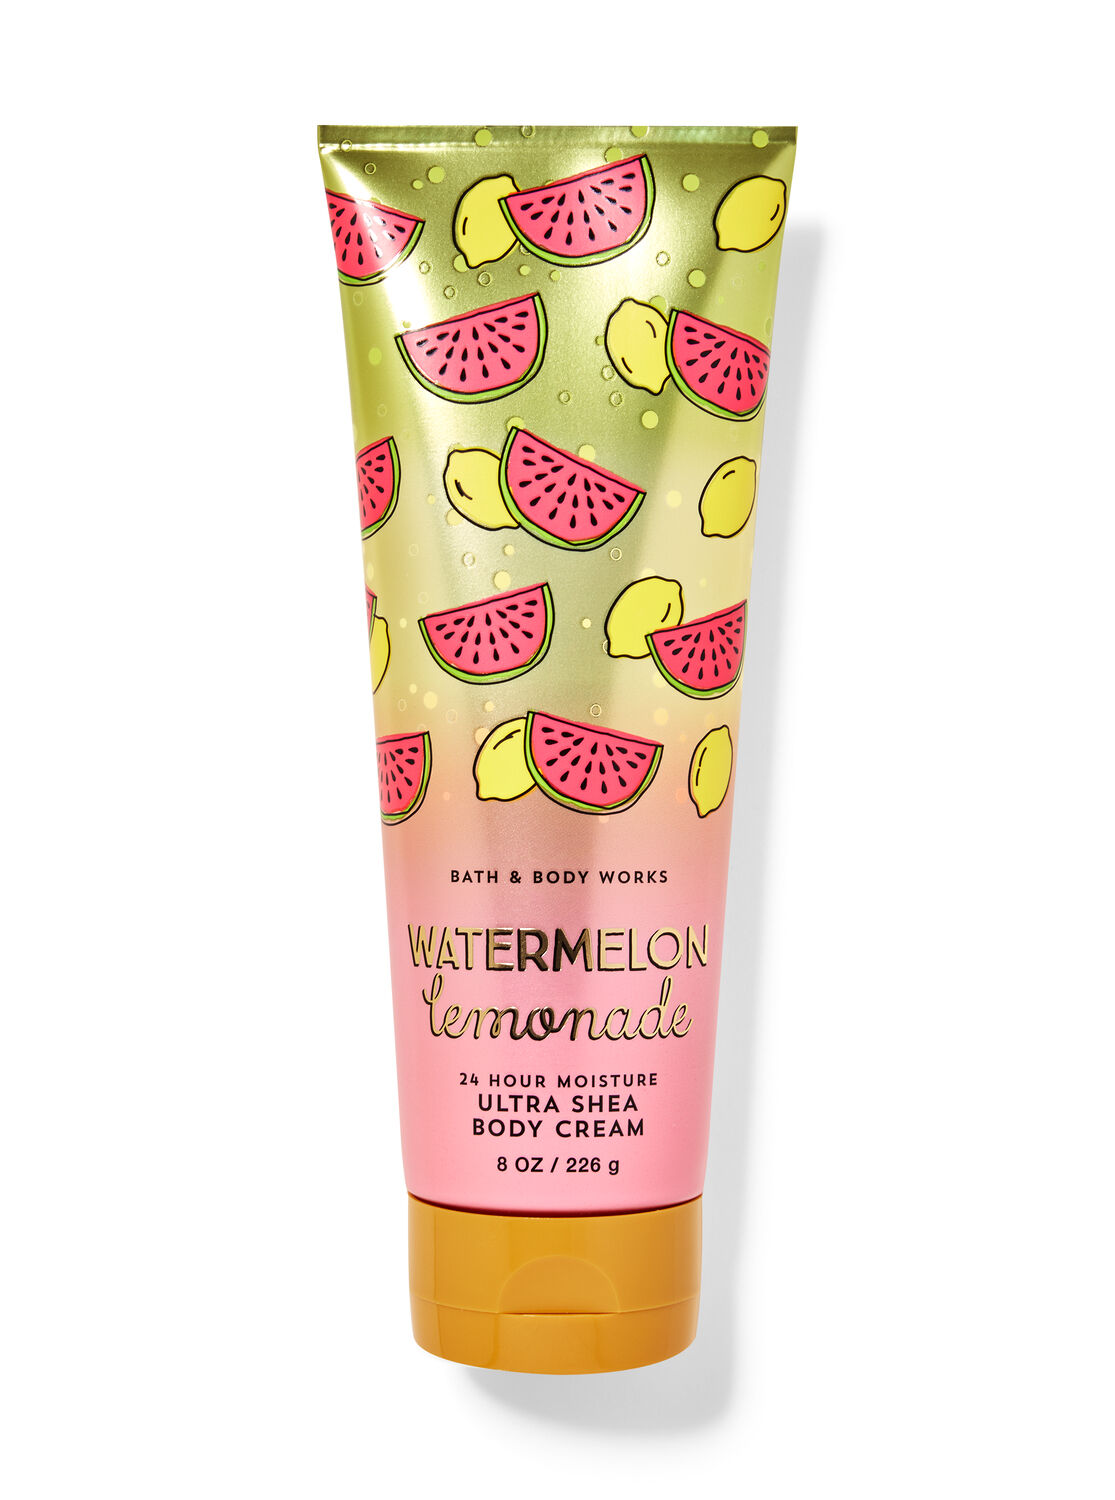 Watermelon Lemonade Ultra Shea Body Cream